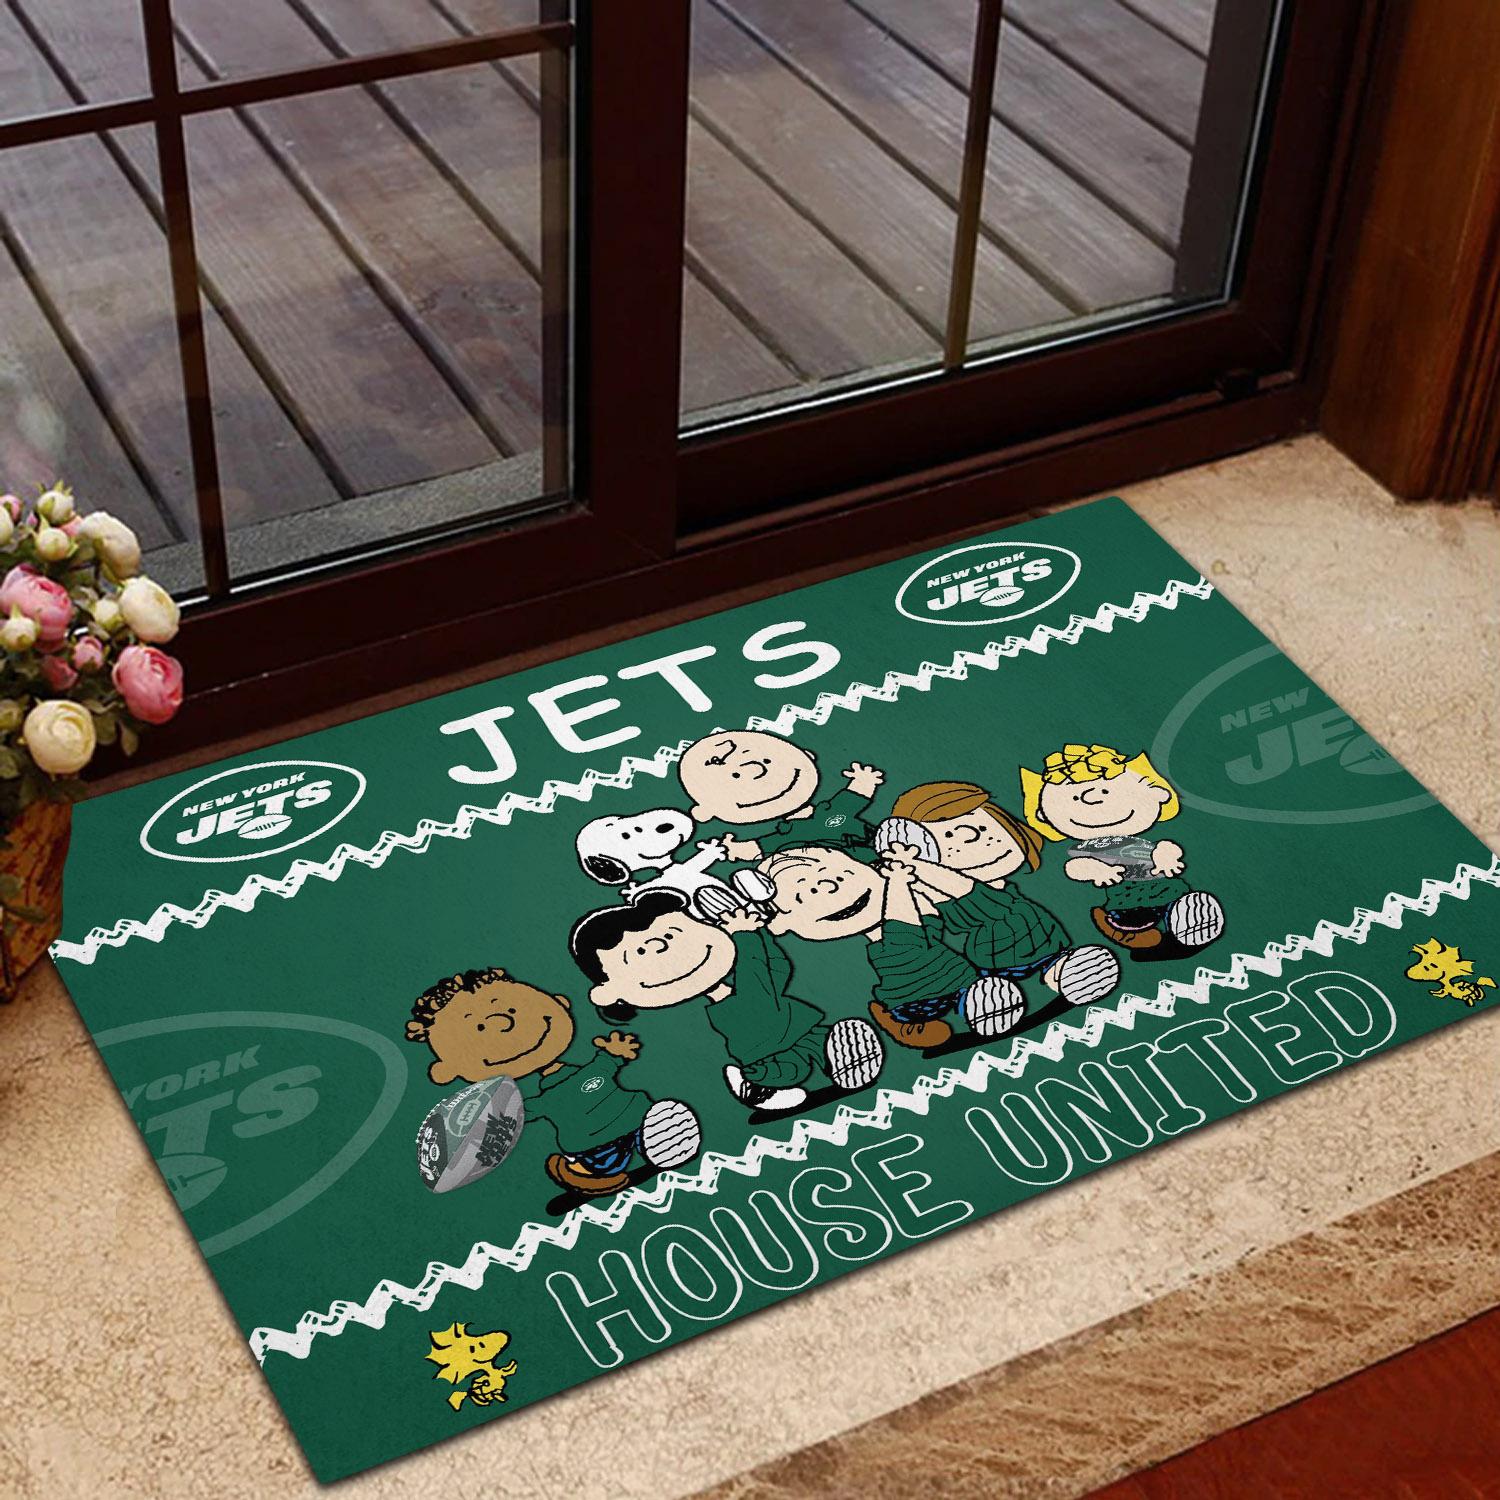 New York Jets Peanuts House United Doormat